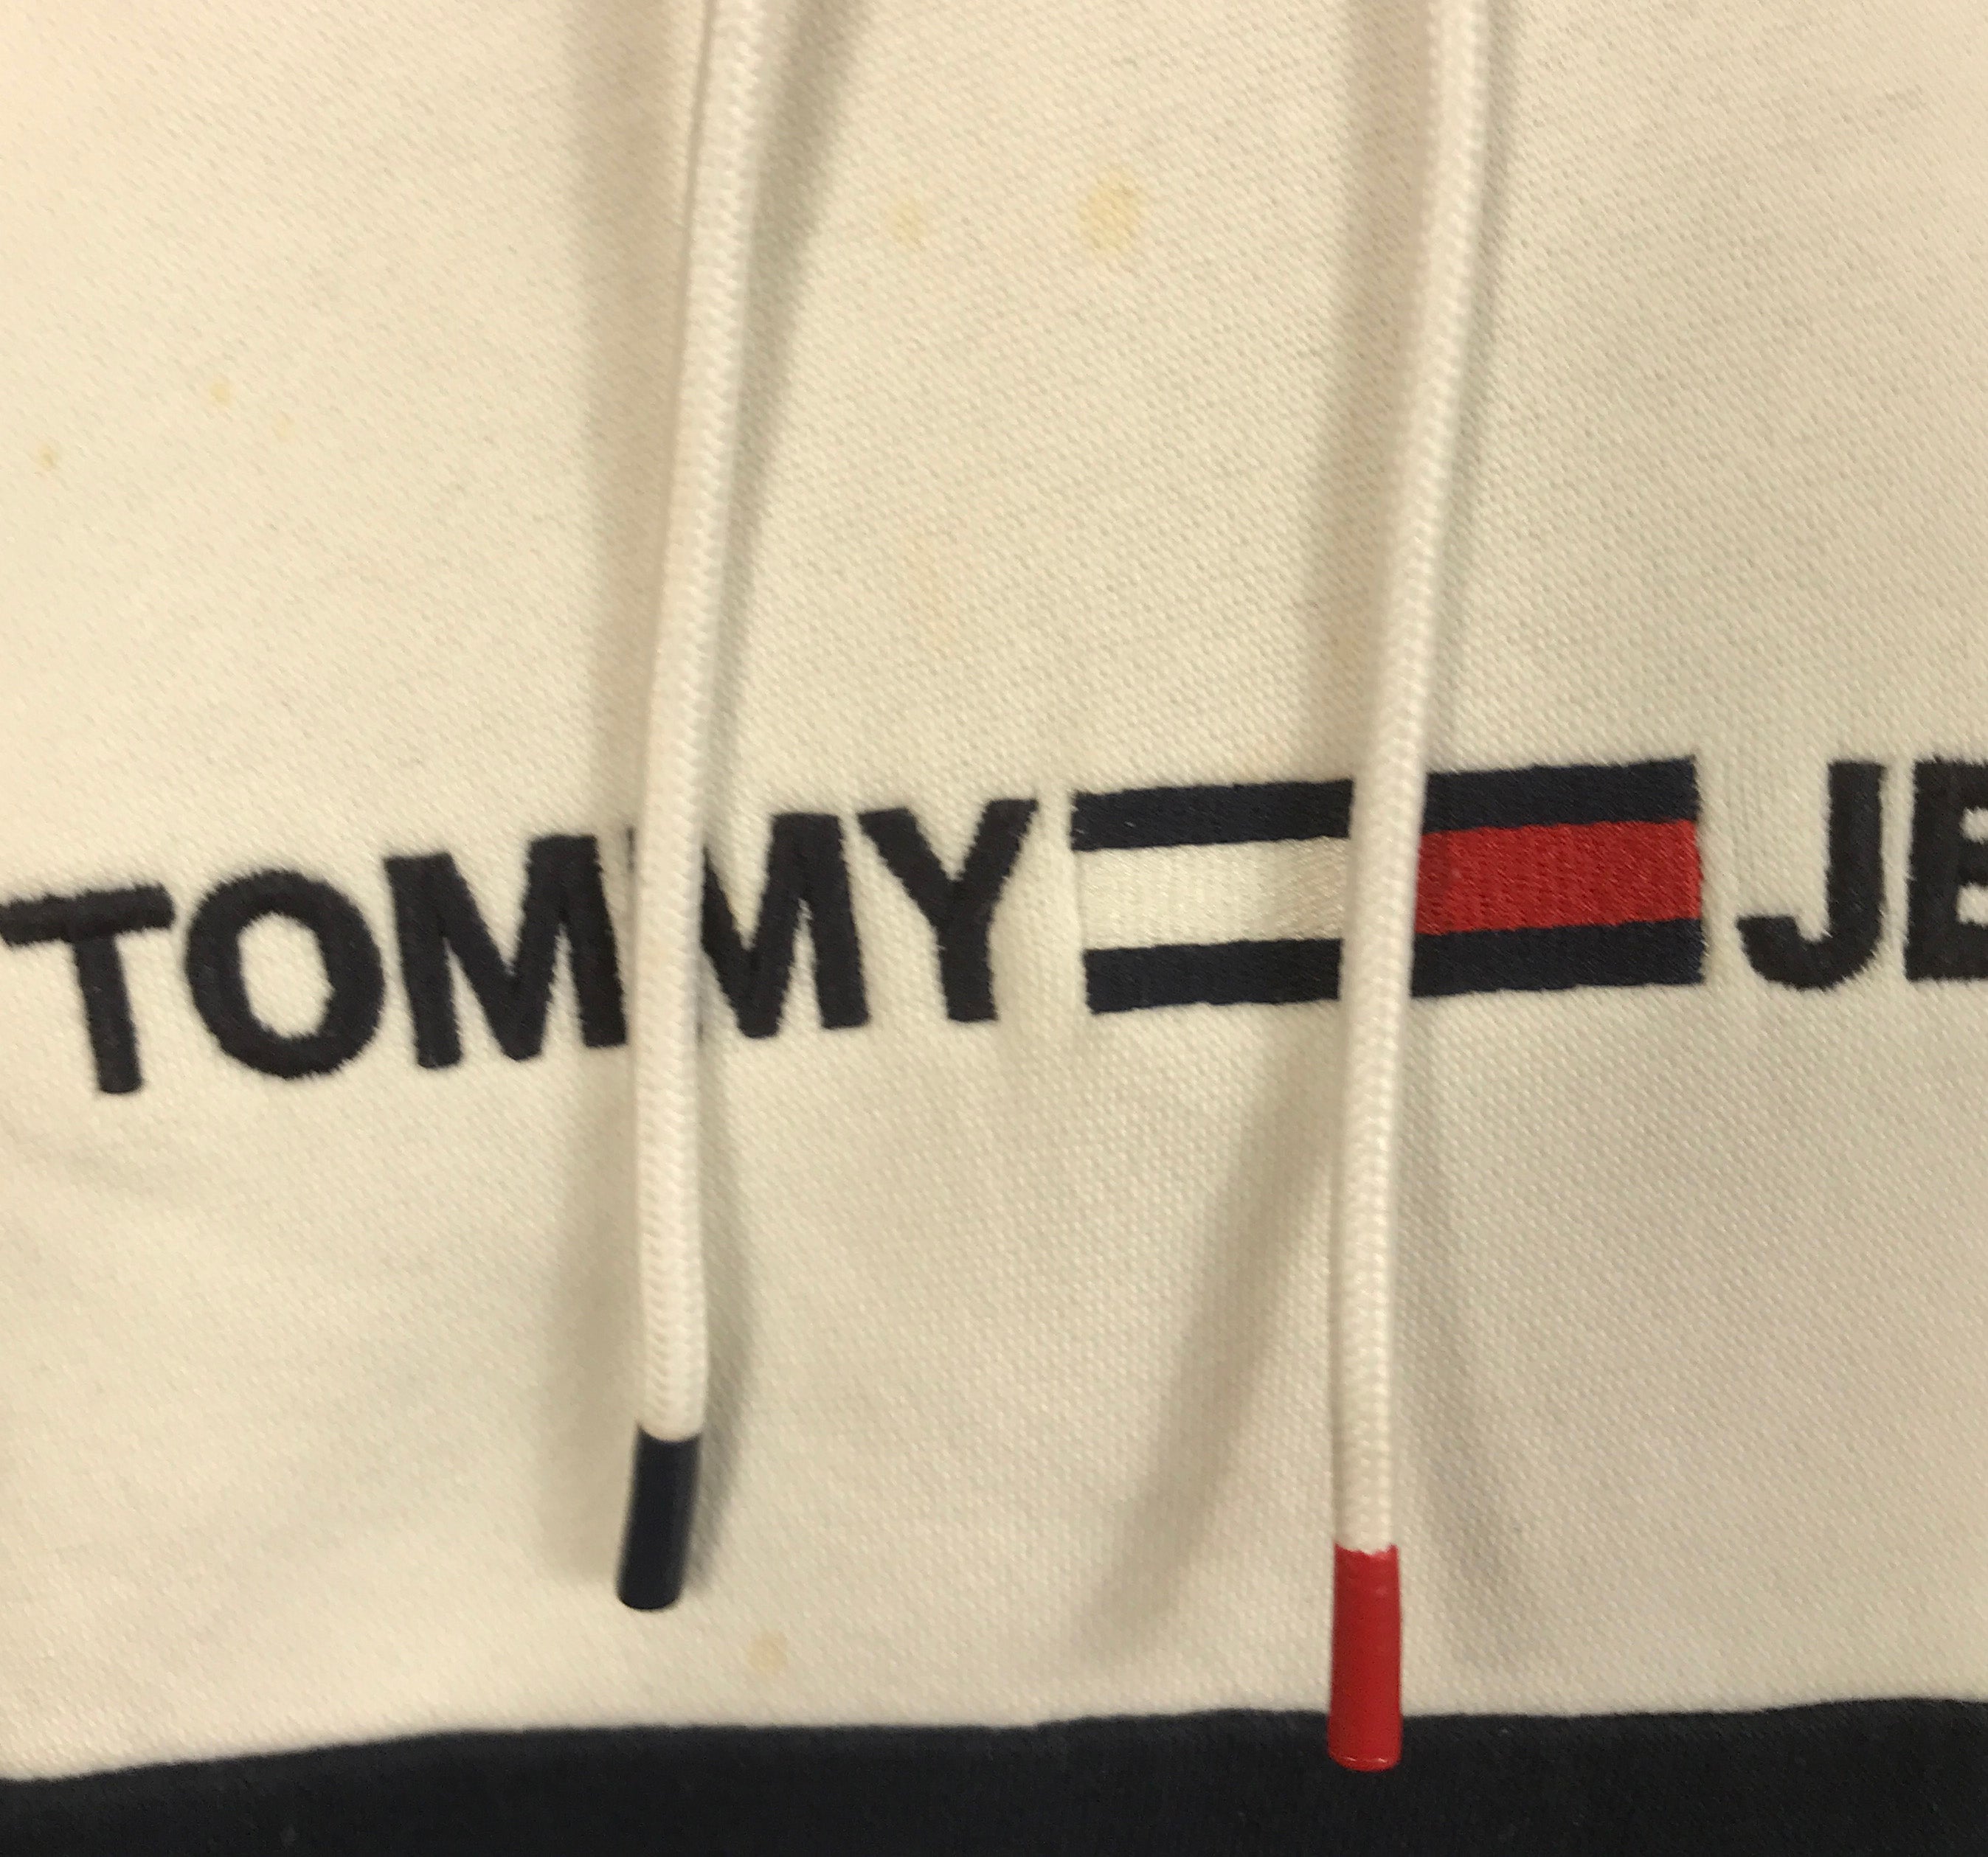 Tommy Hilfiger "Tommy Jeans" Sweatshirt Dress Women's Size X-Small